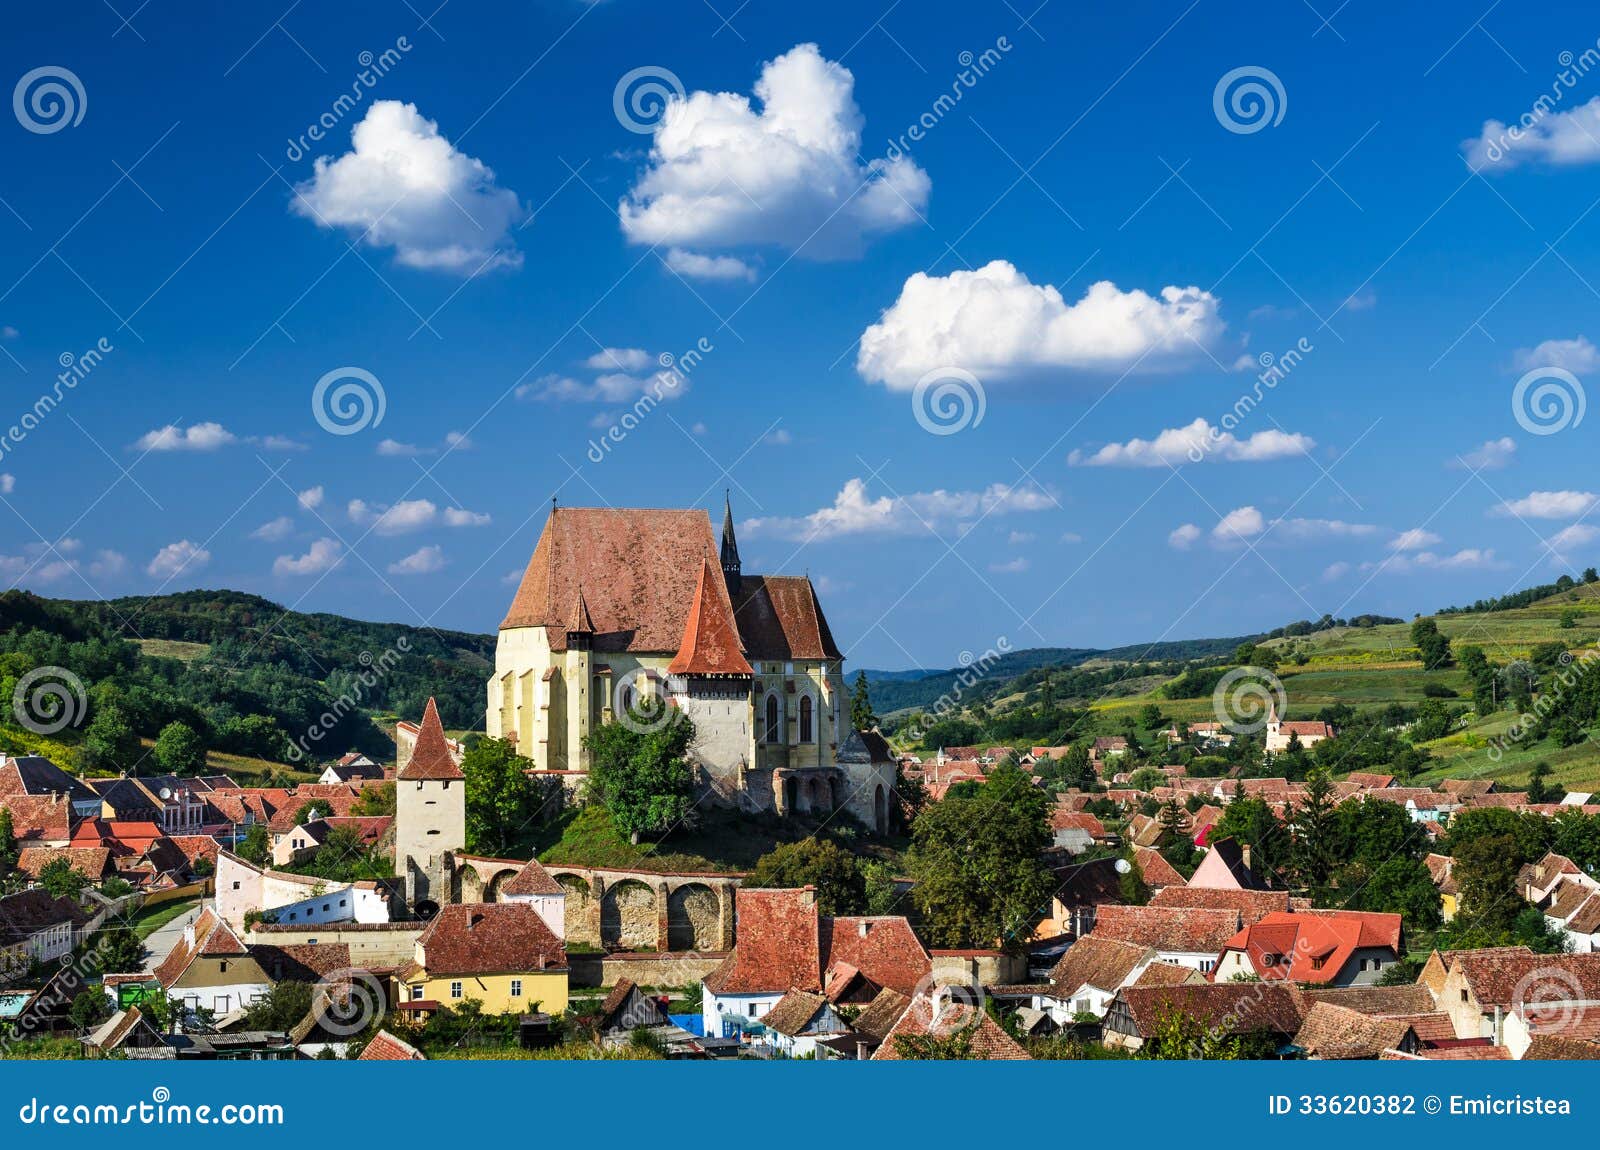 biertan village in transylvania, romania